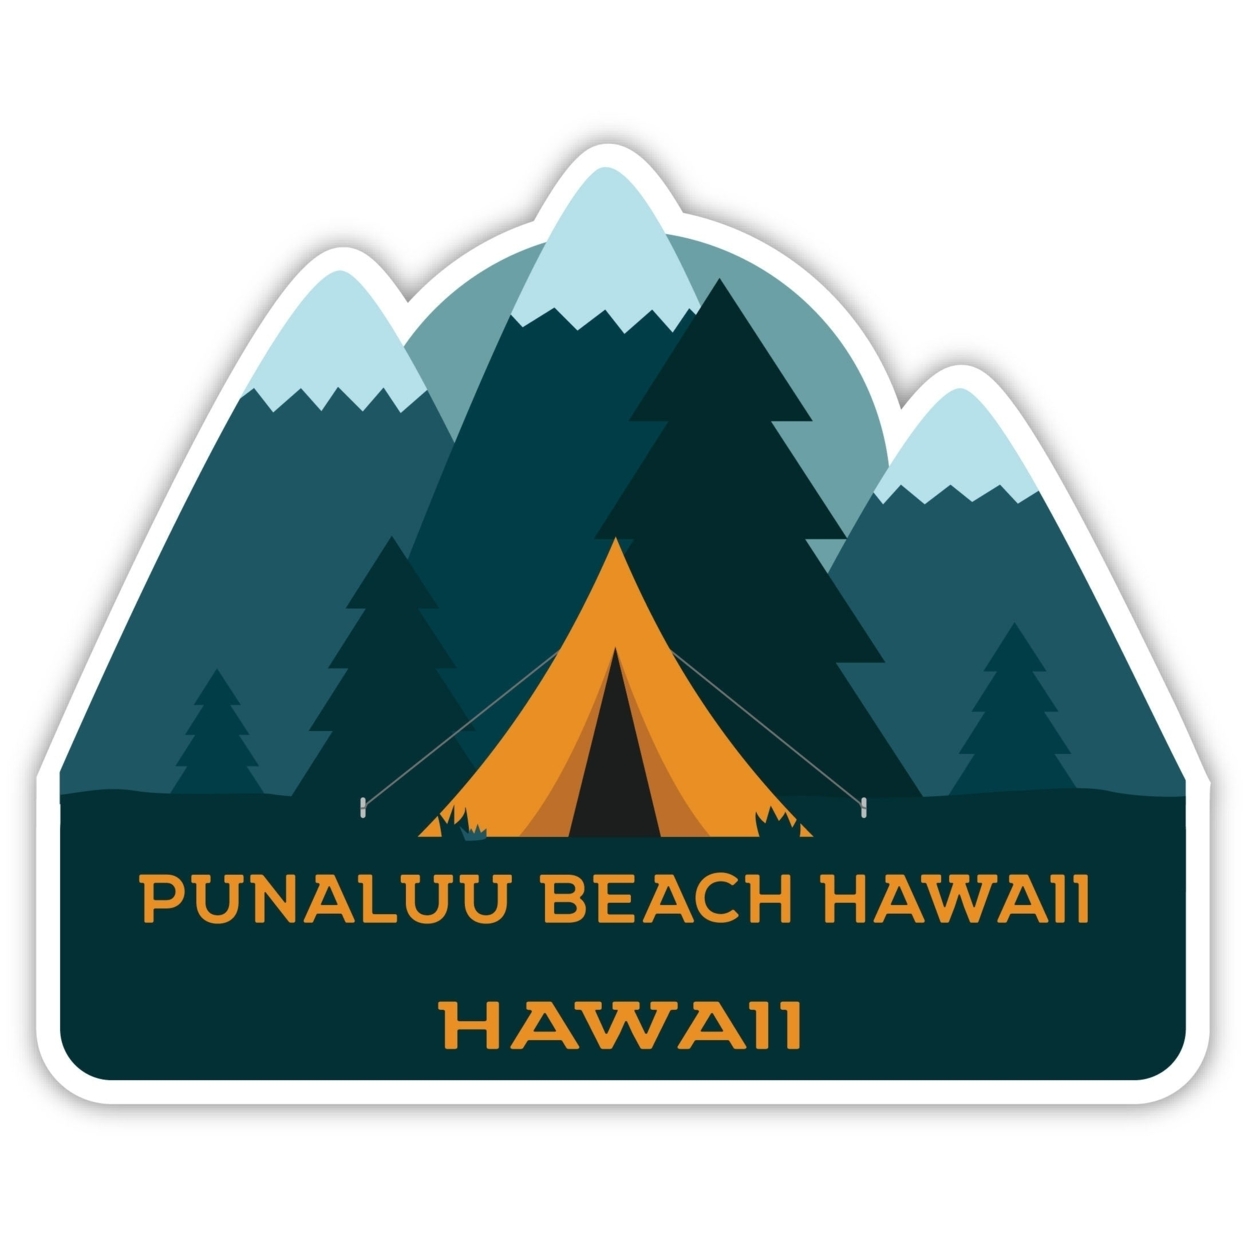 Punaluu Beach Hawaii Souvenir Decorative Stickers (Choose Theme And Size) - Single Unit, 4-Inch, Tent